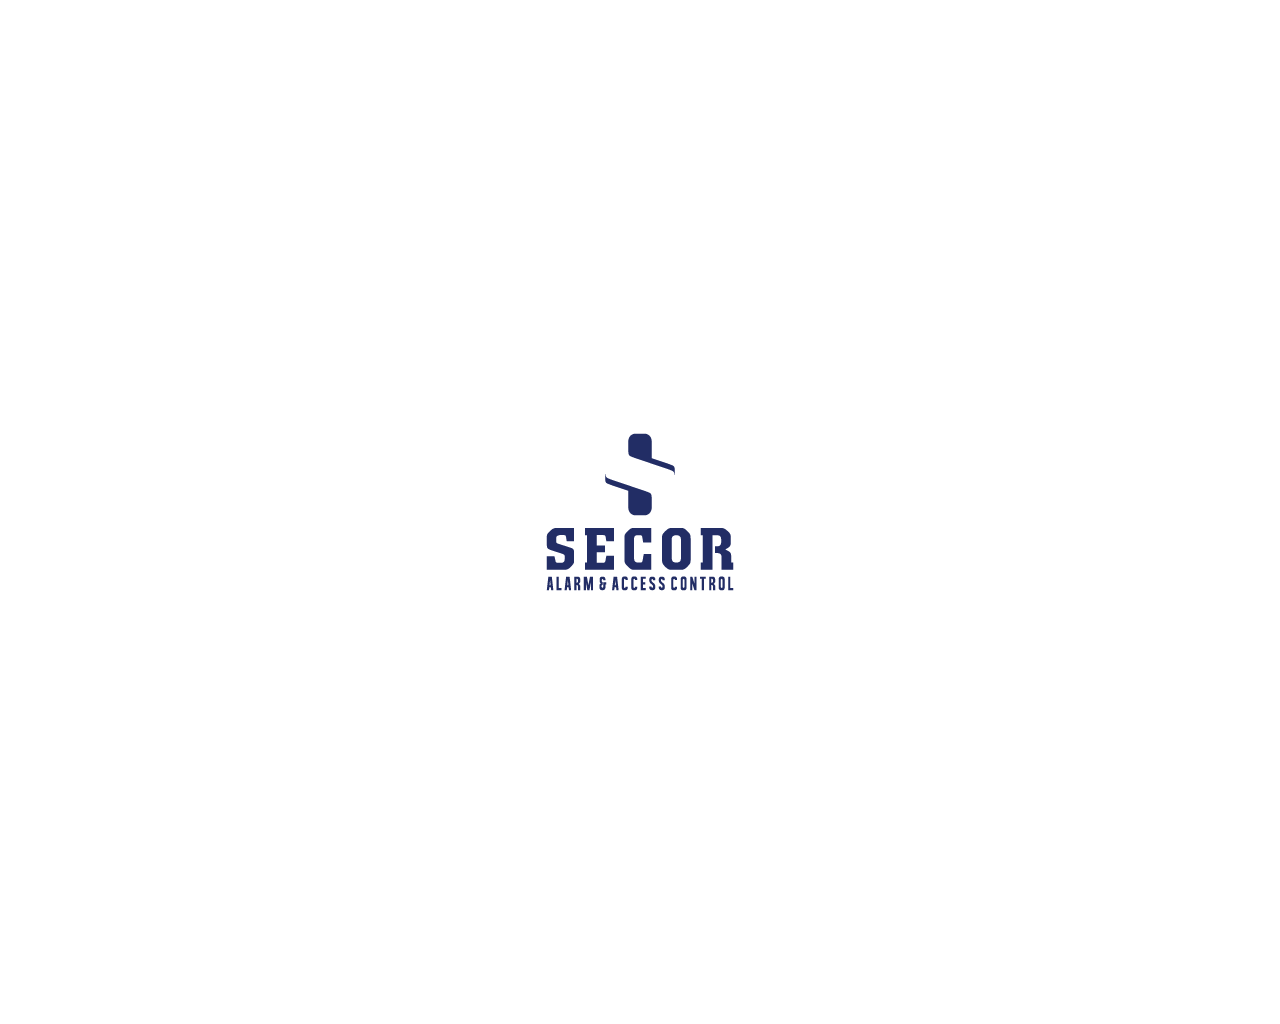 DFM Logo - Bold, Serious, It Company Logo Design for SECOR alarm & access